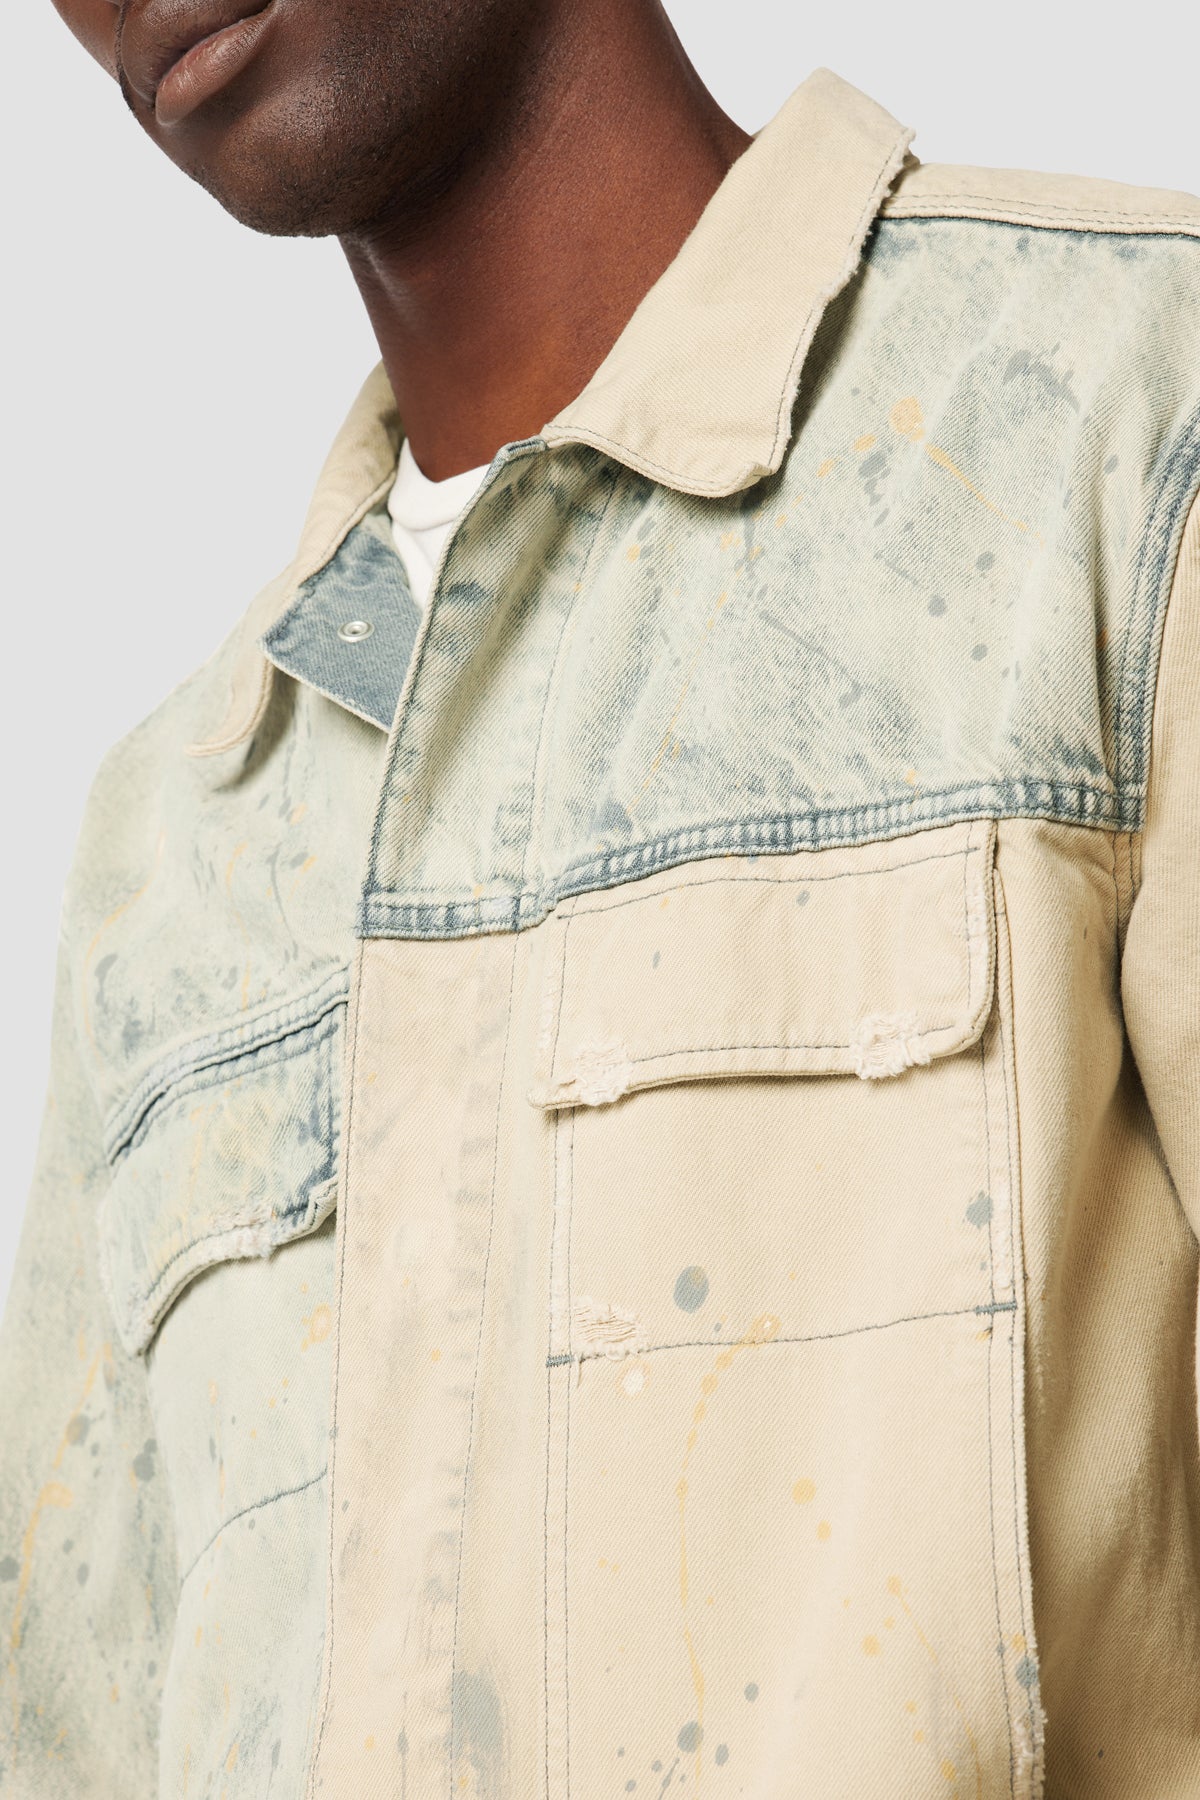 Garment-Dyed Denim Patch Pocket Trucker Jacket